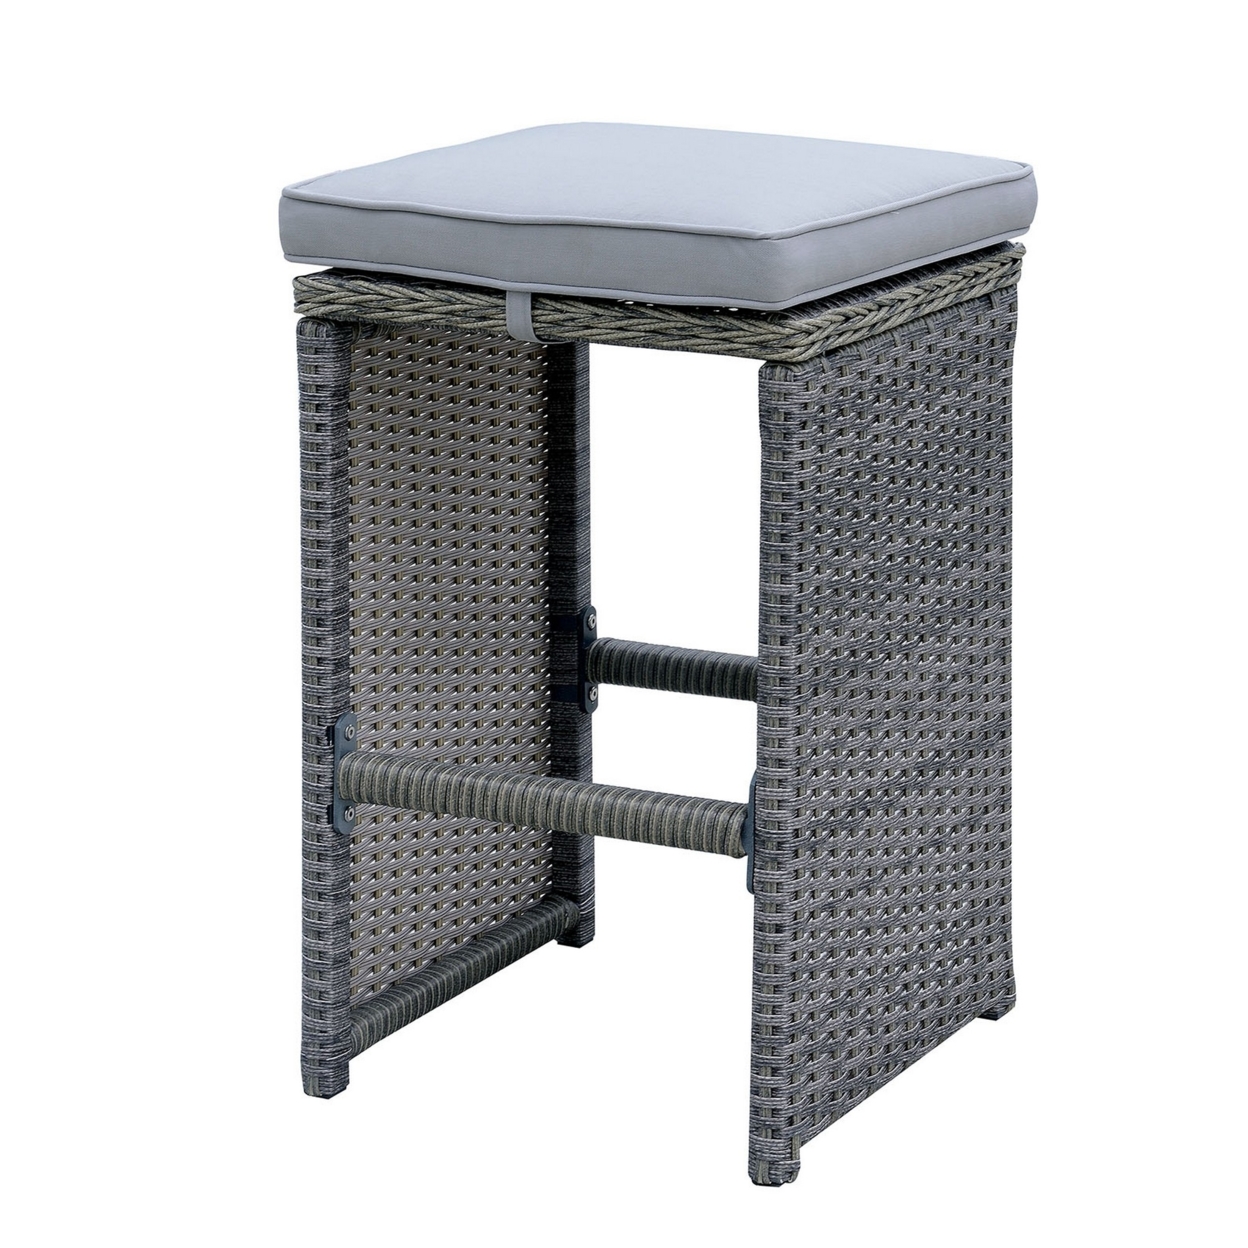 6 Piece Patio Bar Stool In Aluminum Wicker Frame And Padded Fabric Seat, Gray- Saltoro Sherpi